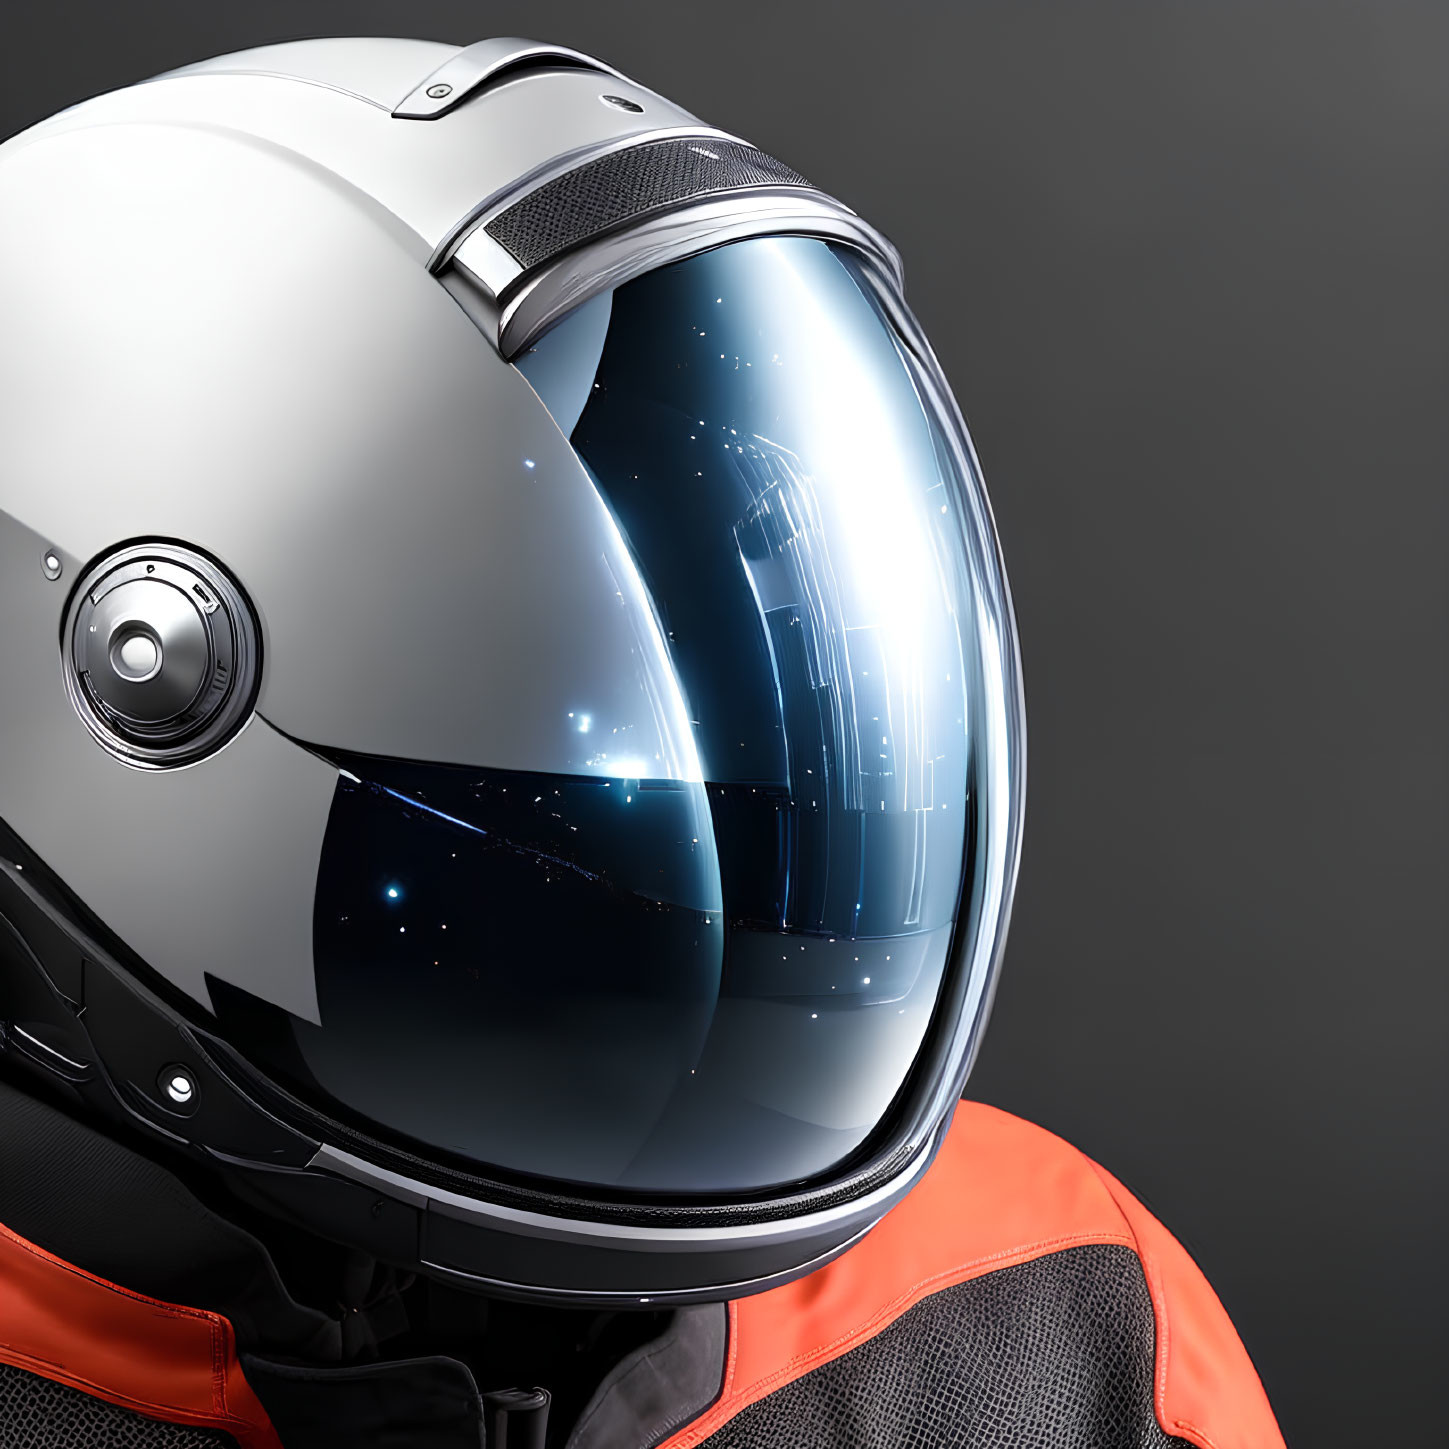 Reflective visor white motorcycle helmet on mannequin in orange and black jacket